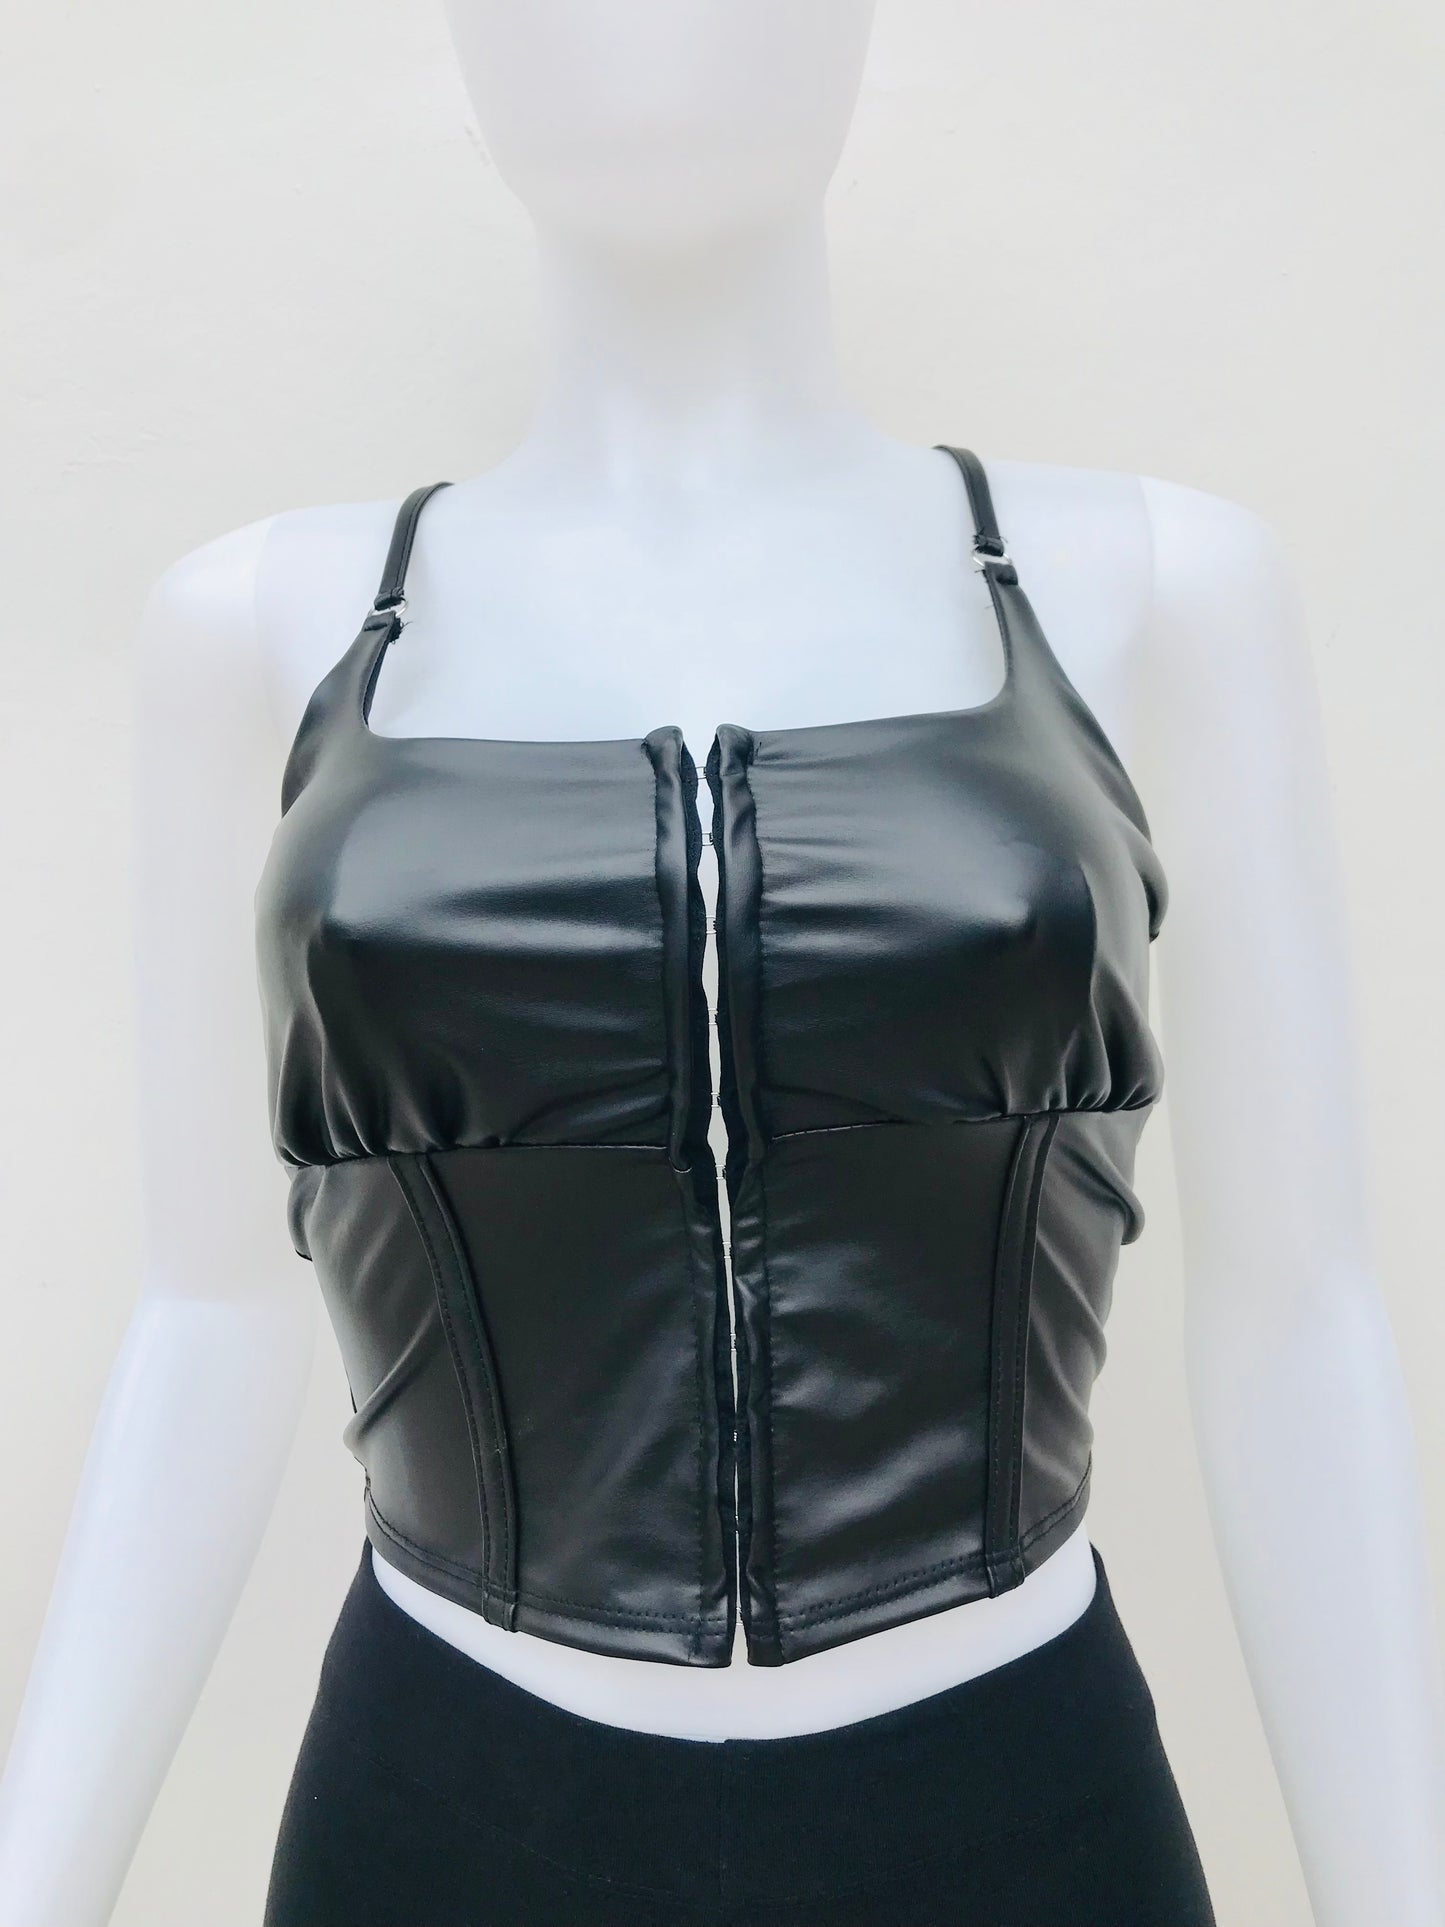 Top FASHION NOVA Original, negro en leather estilo corset de tirantes.